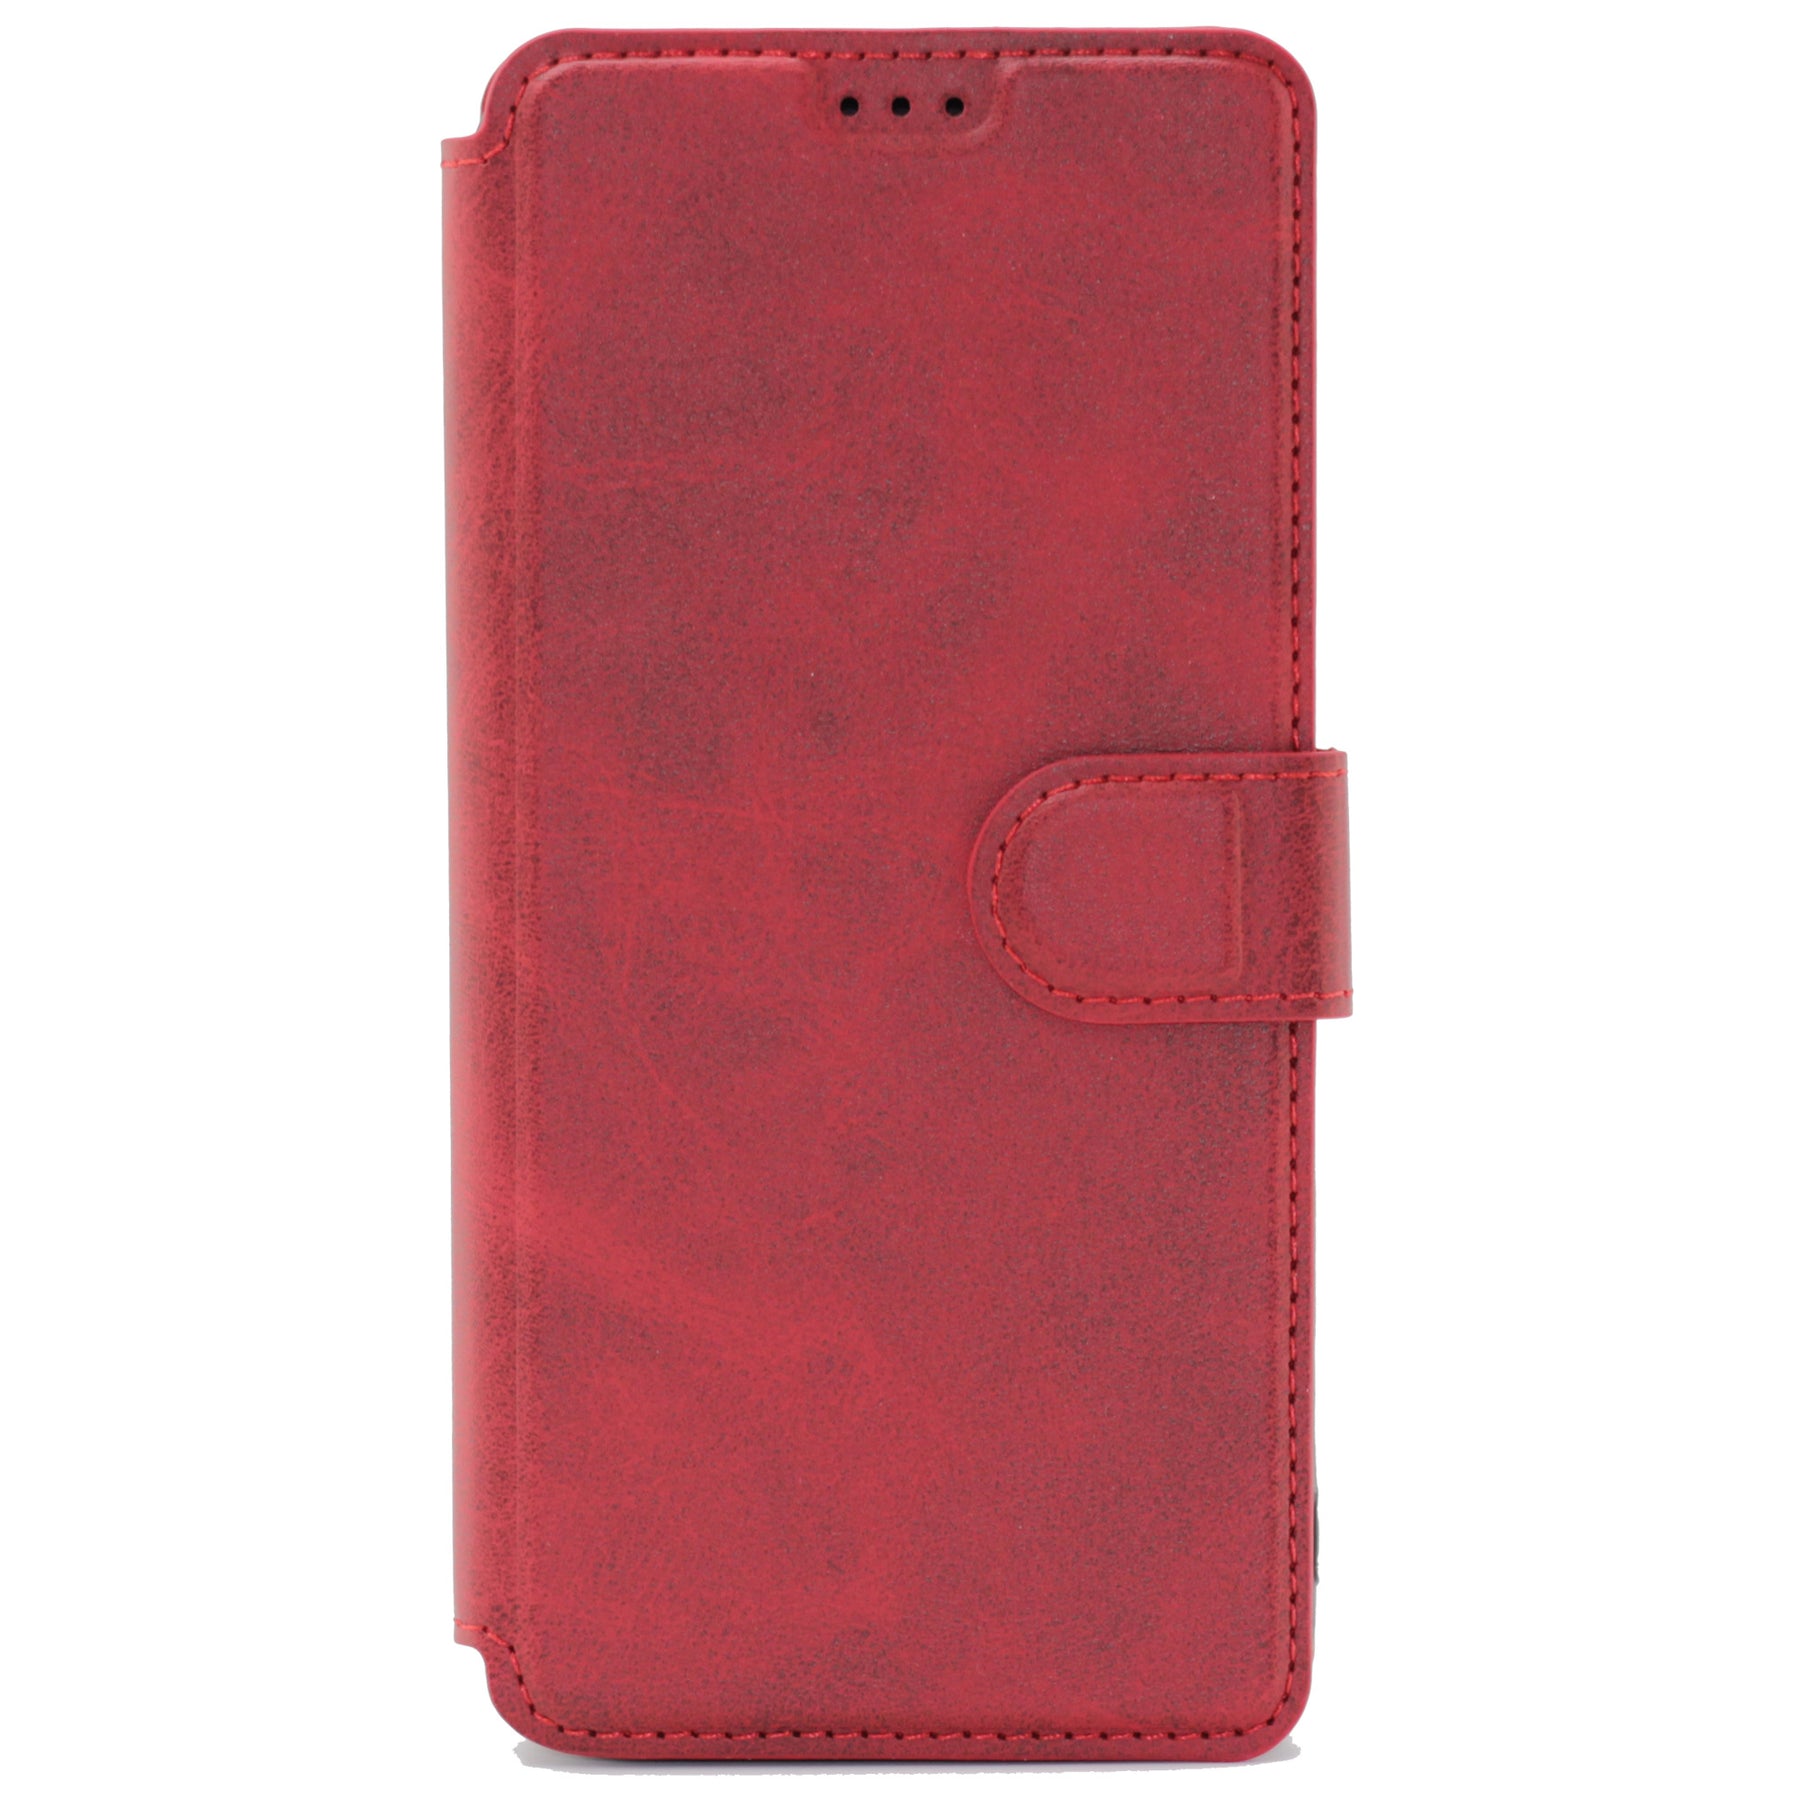 Samsung A30/A50 red wallet case